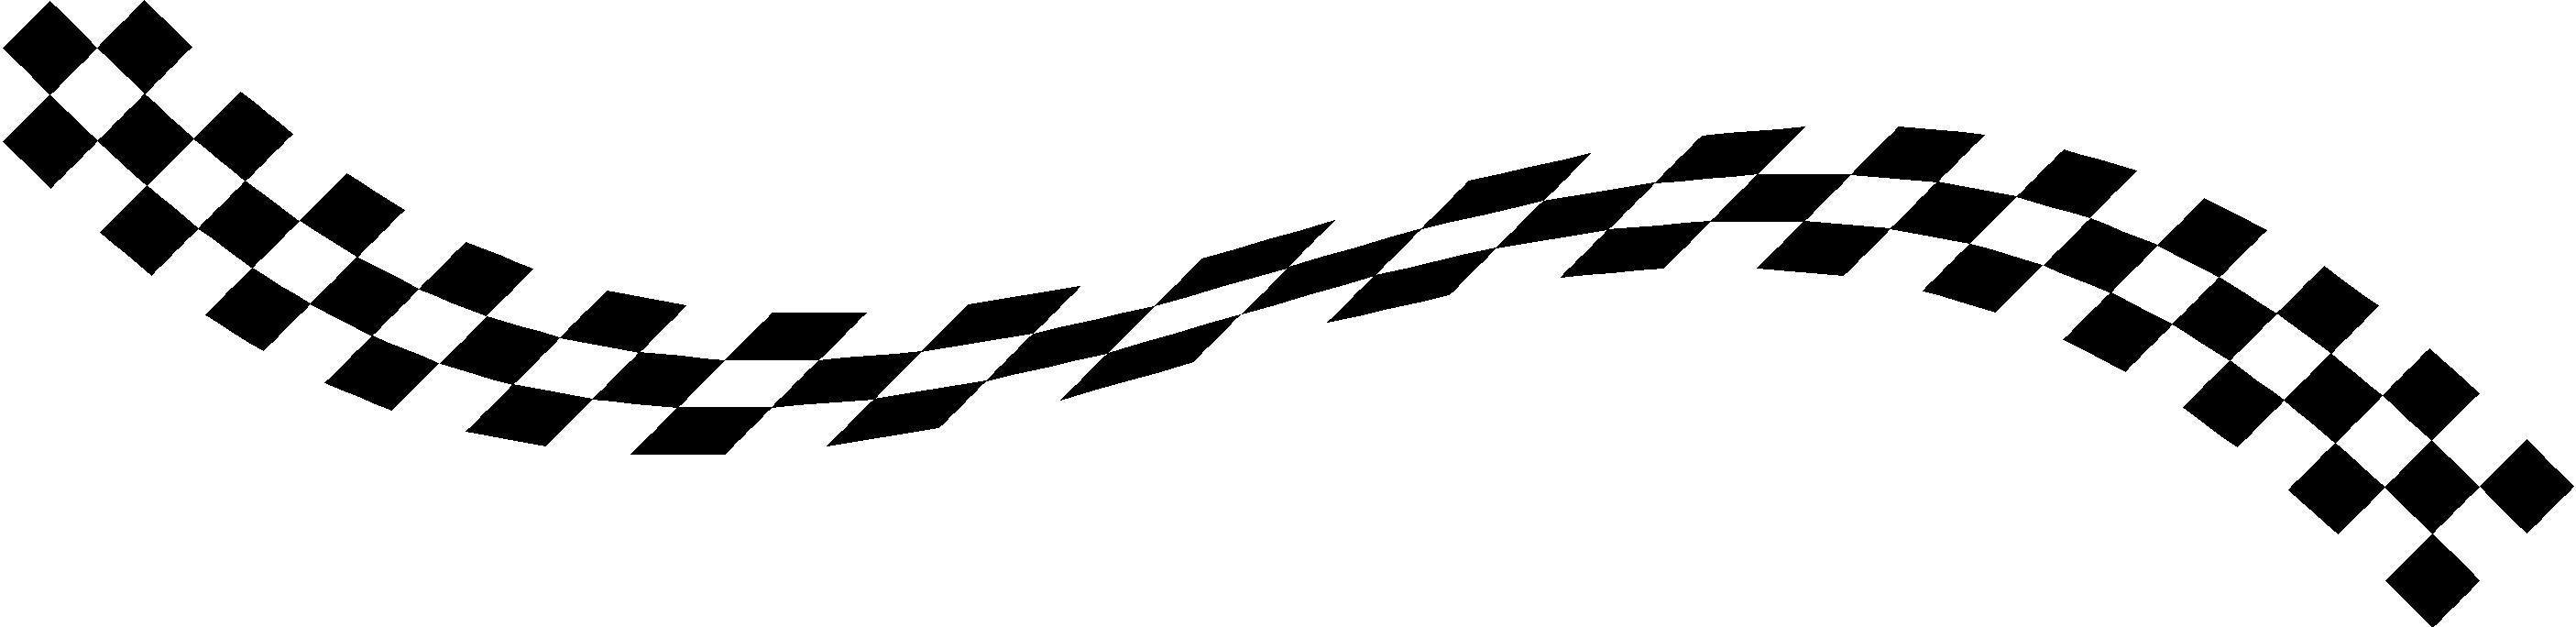 Flag Decals :: Checkered Flag Decal / Sticker 32 - Premium Custom ...